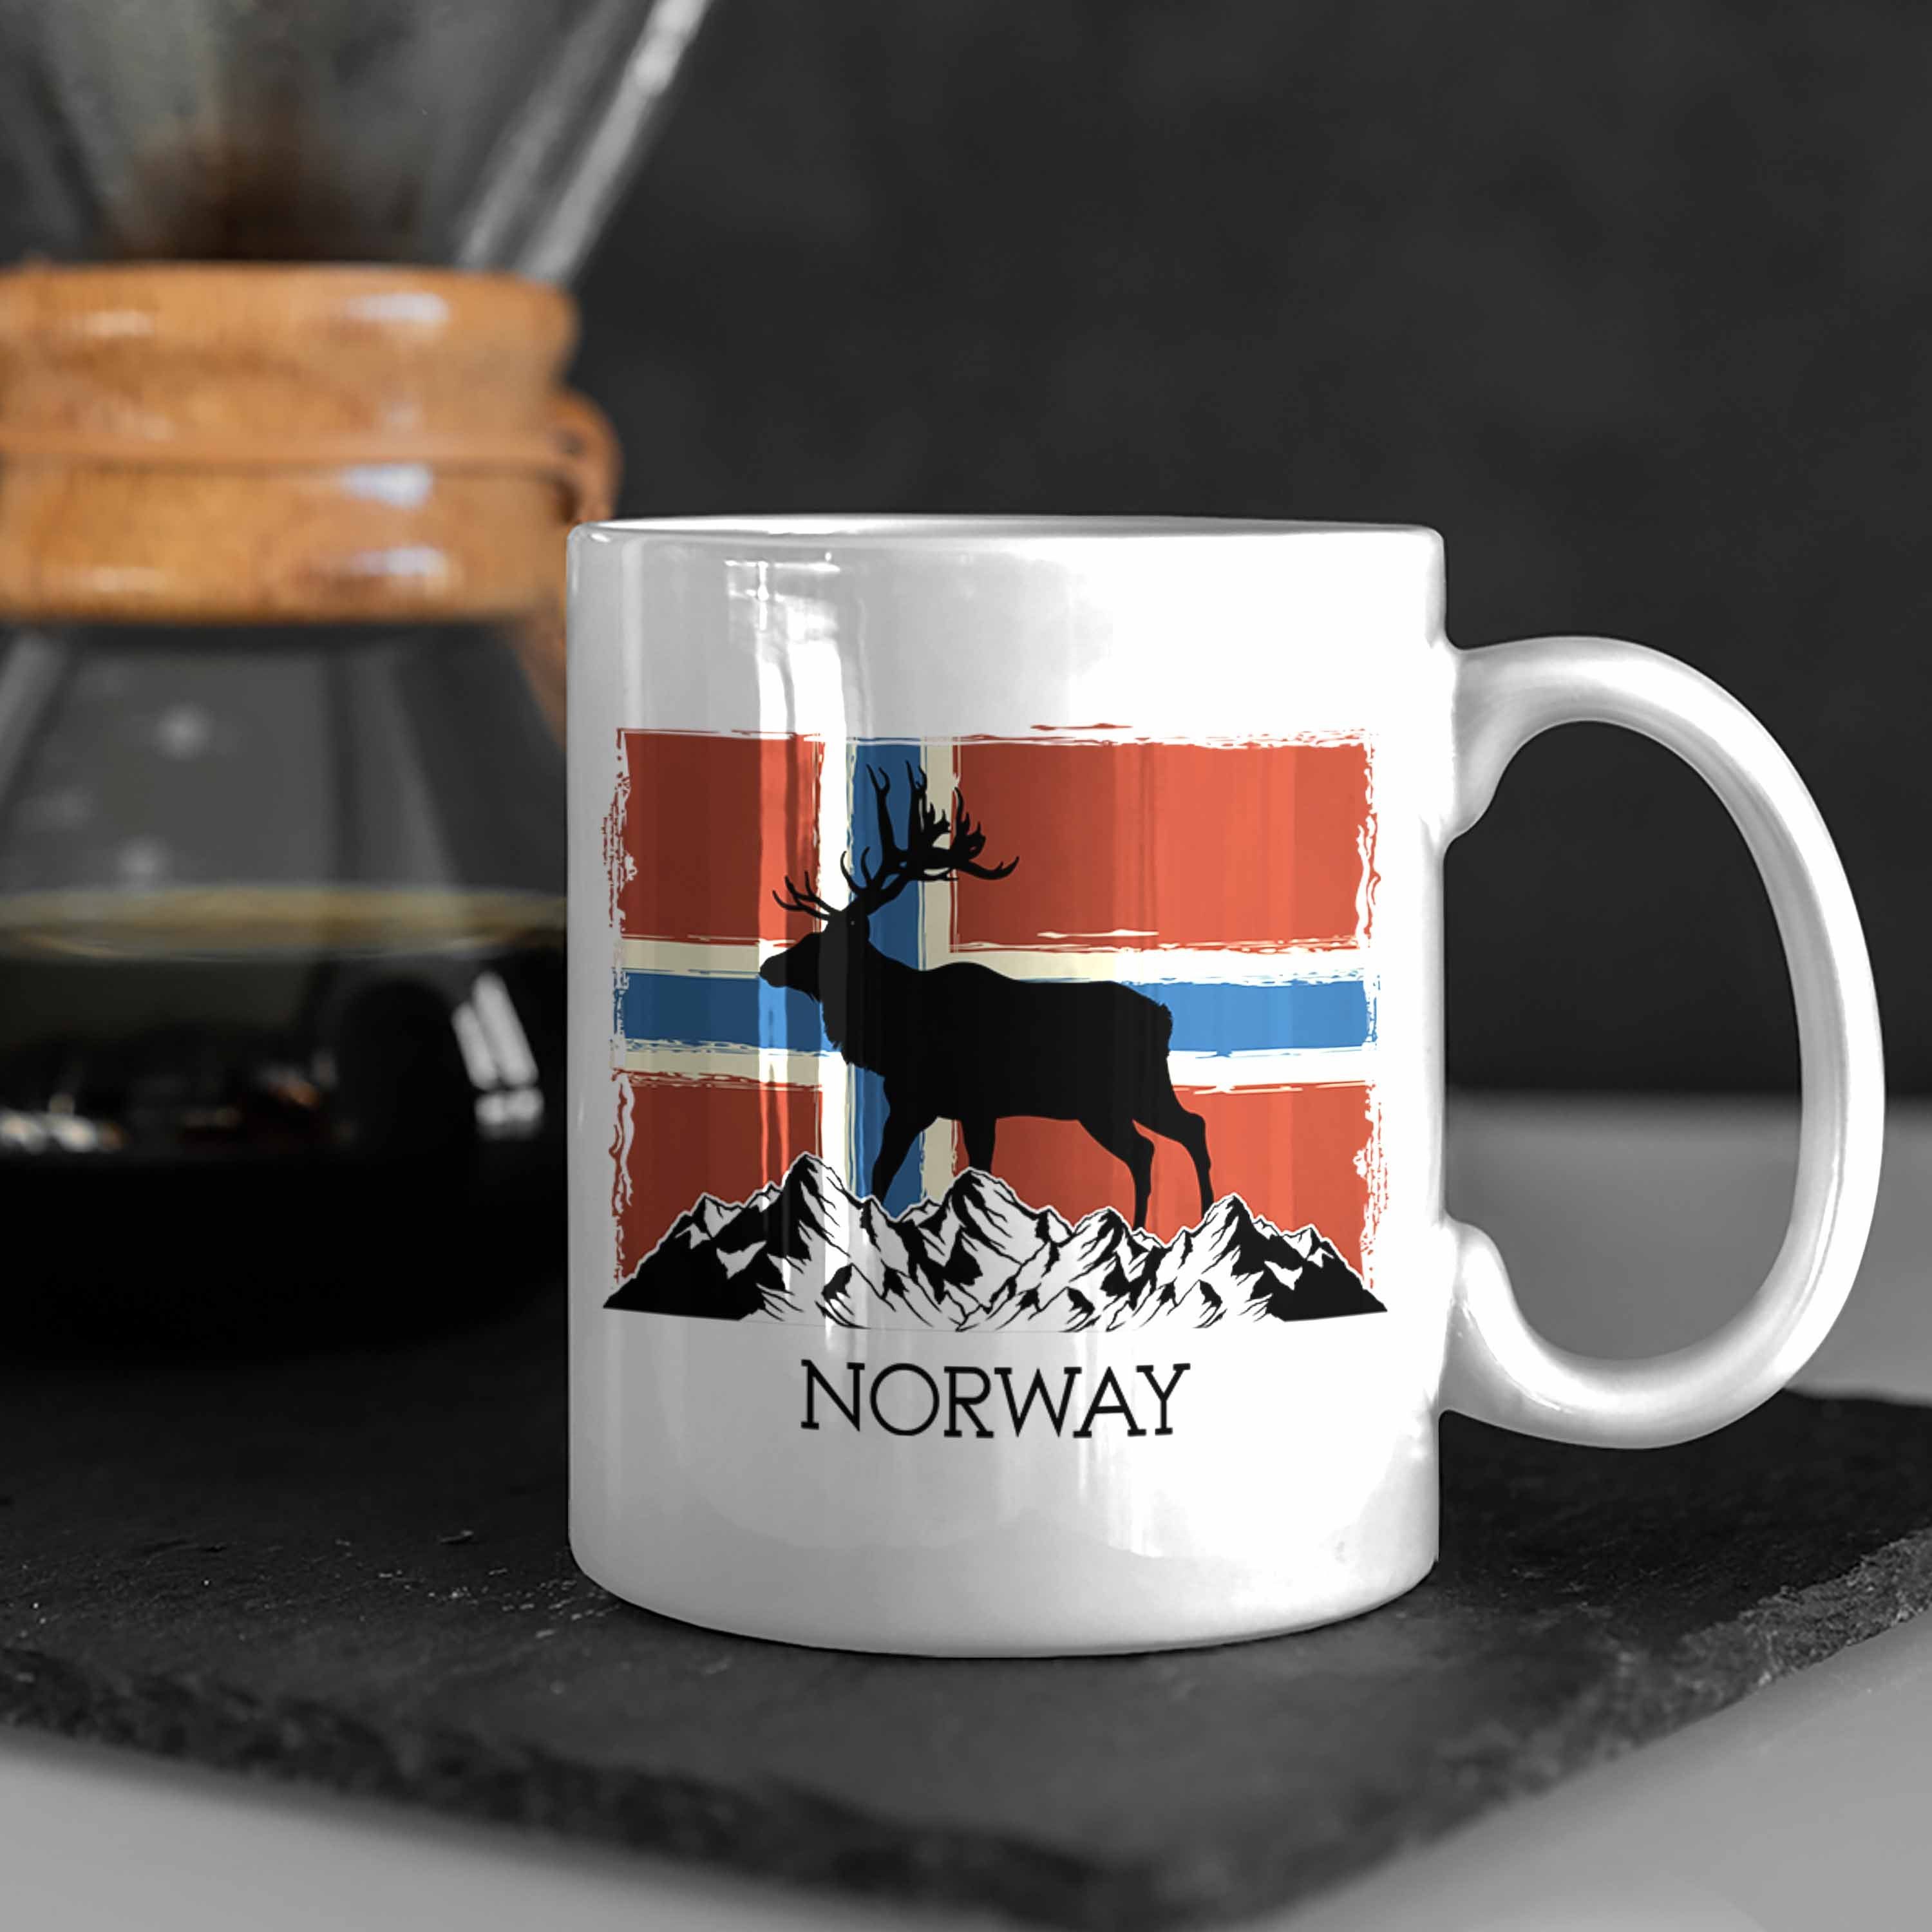 Norway Geschenke Weiss - Nordkap Trendation Tasse Flagge Elch Trendation Norwegen Tasse